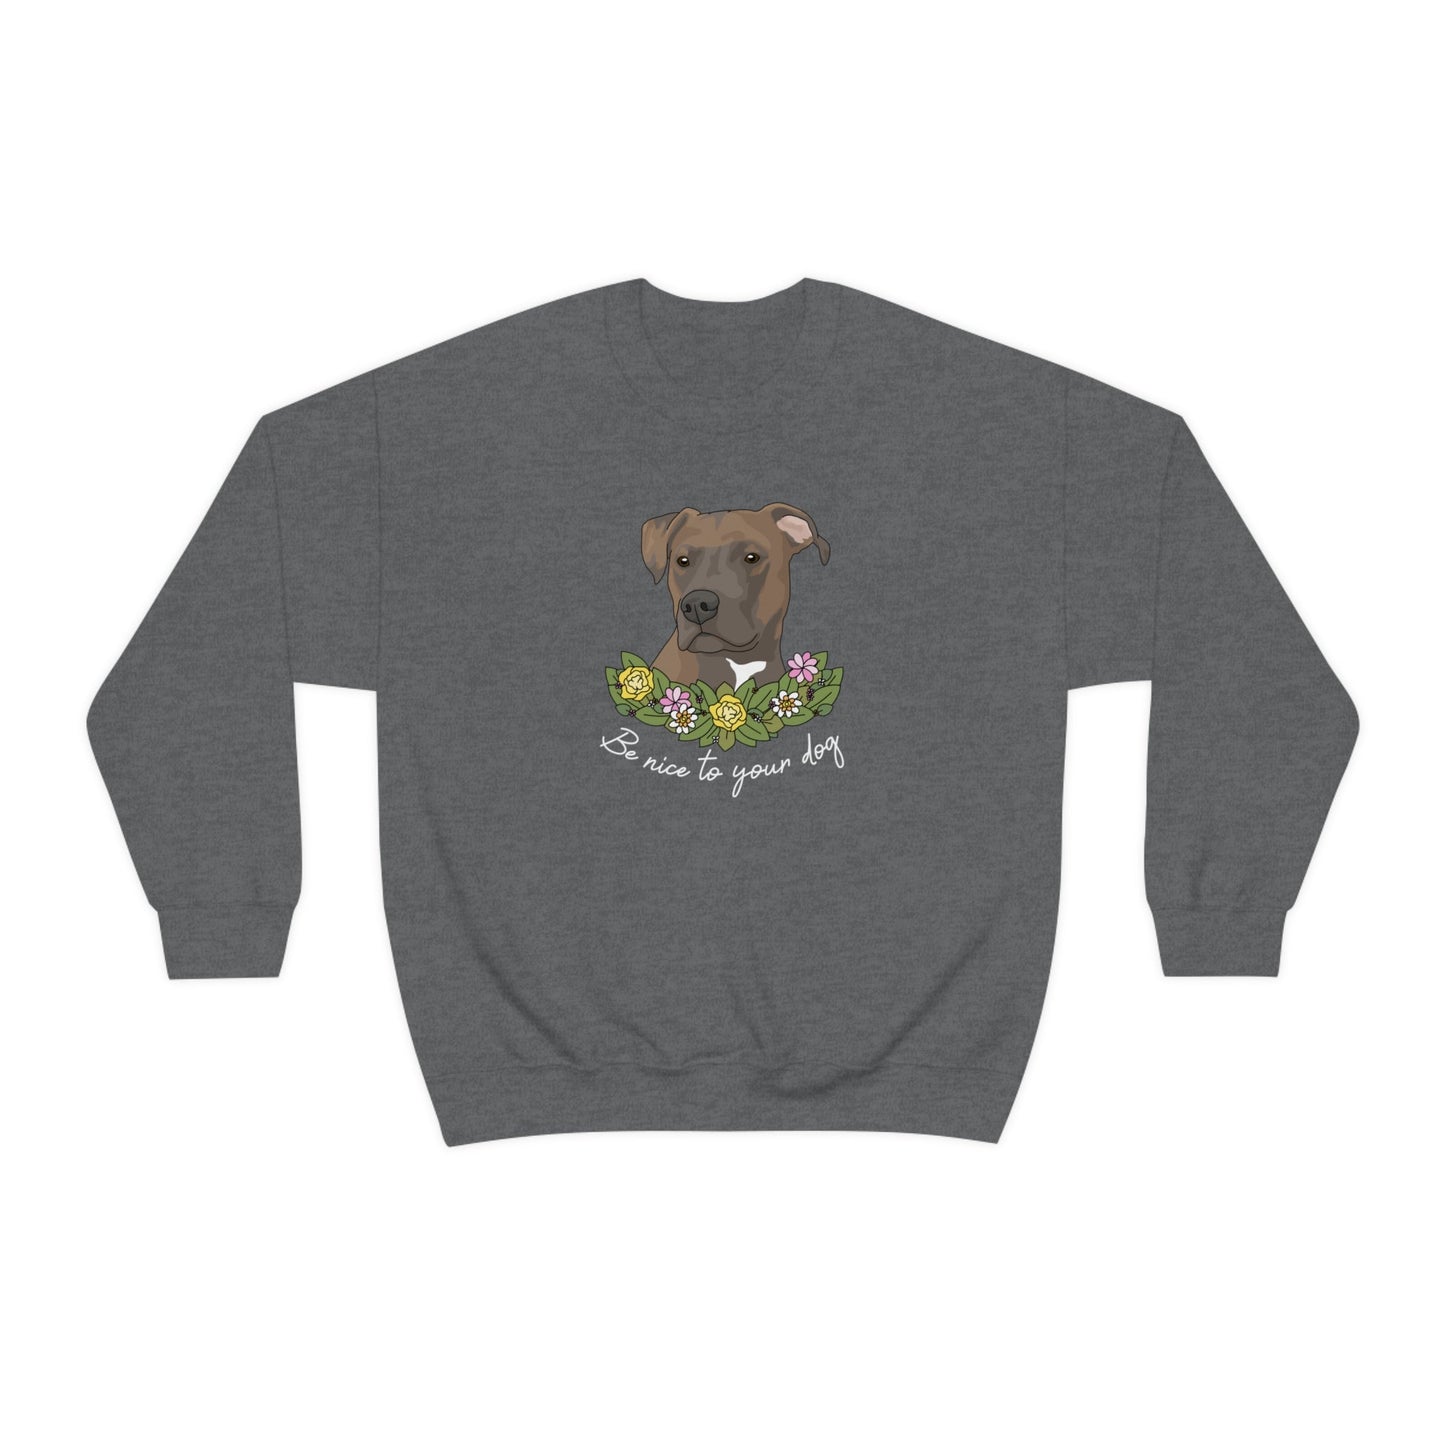 Be Nice to Your Dog | Crewneck Sweatshirt - Detezi Designs-10537694532754584573